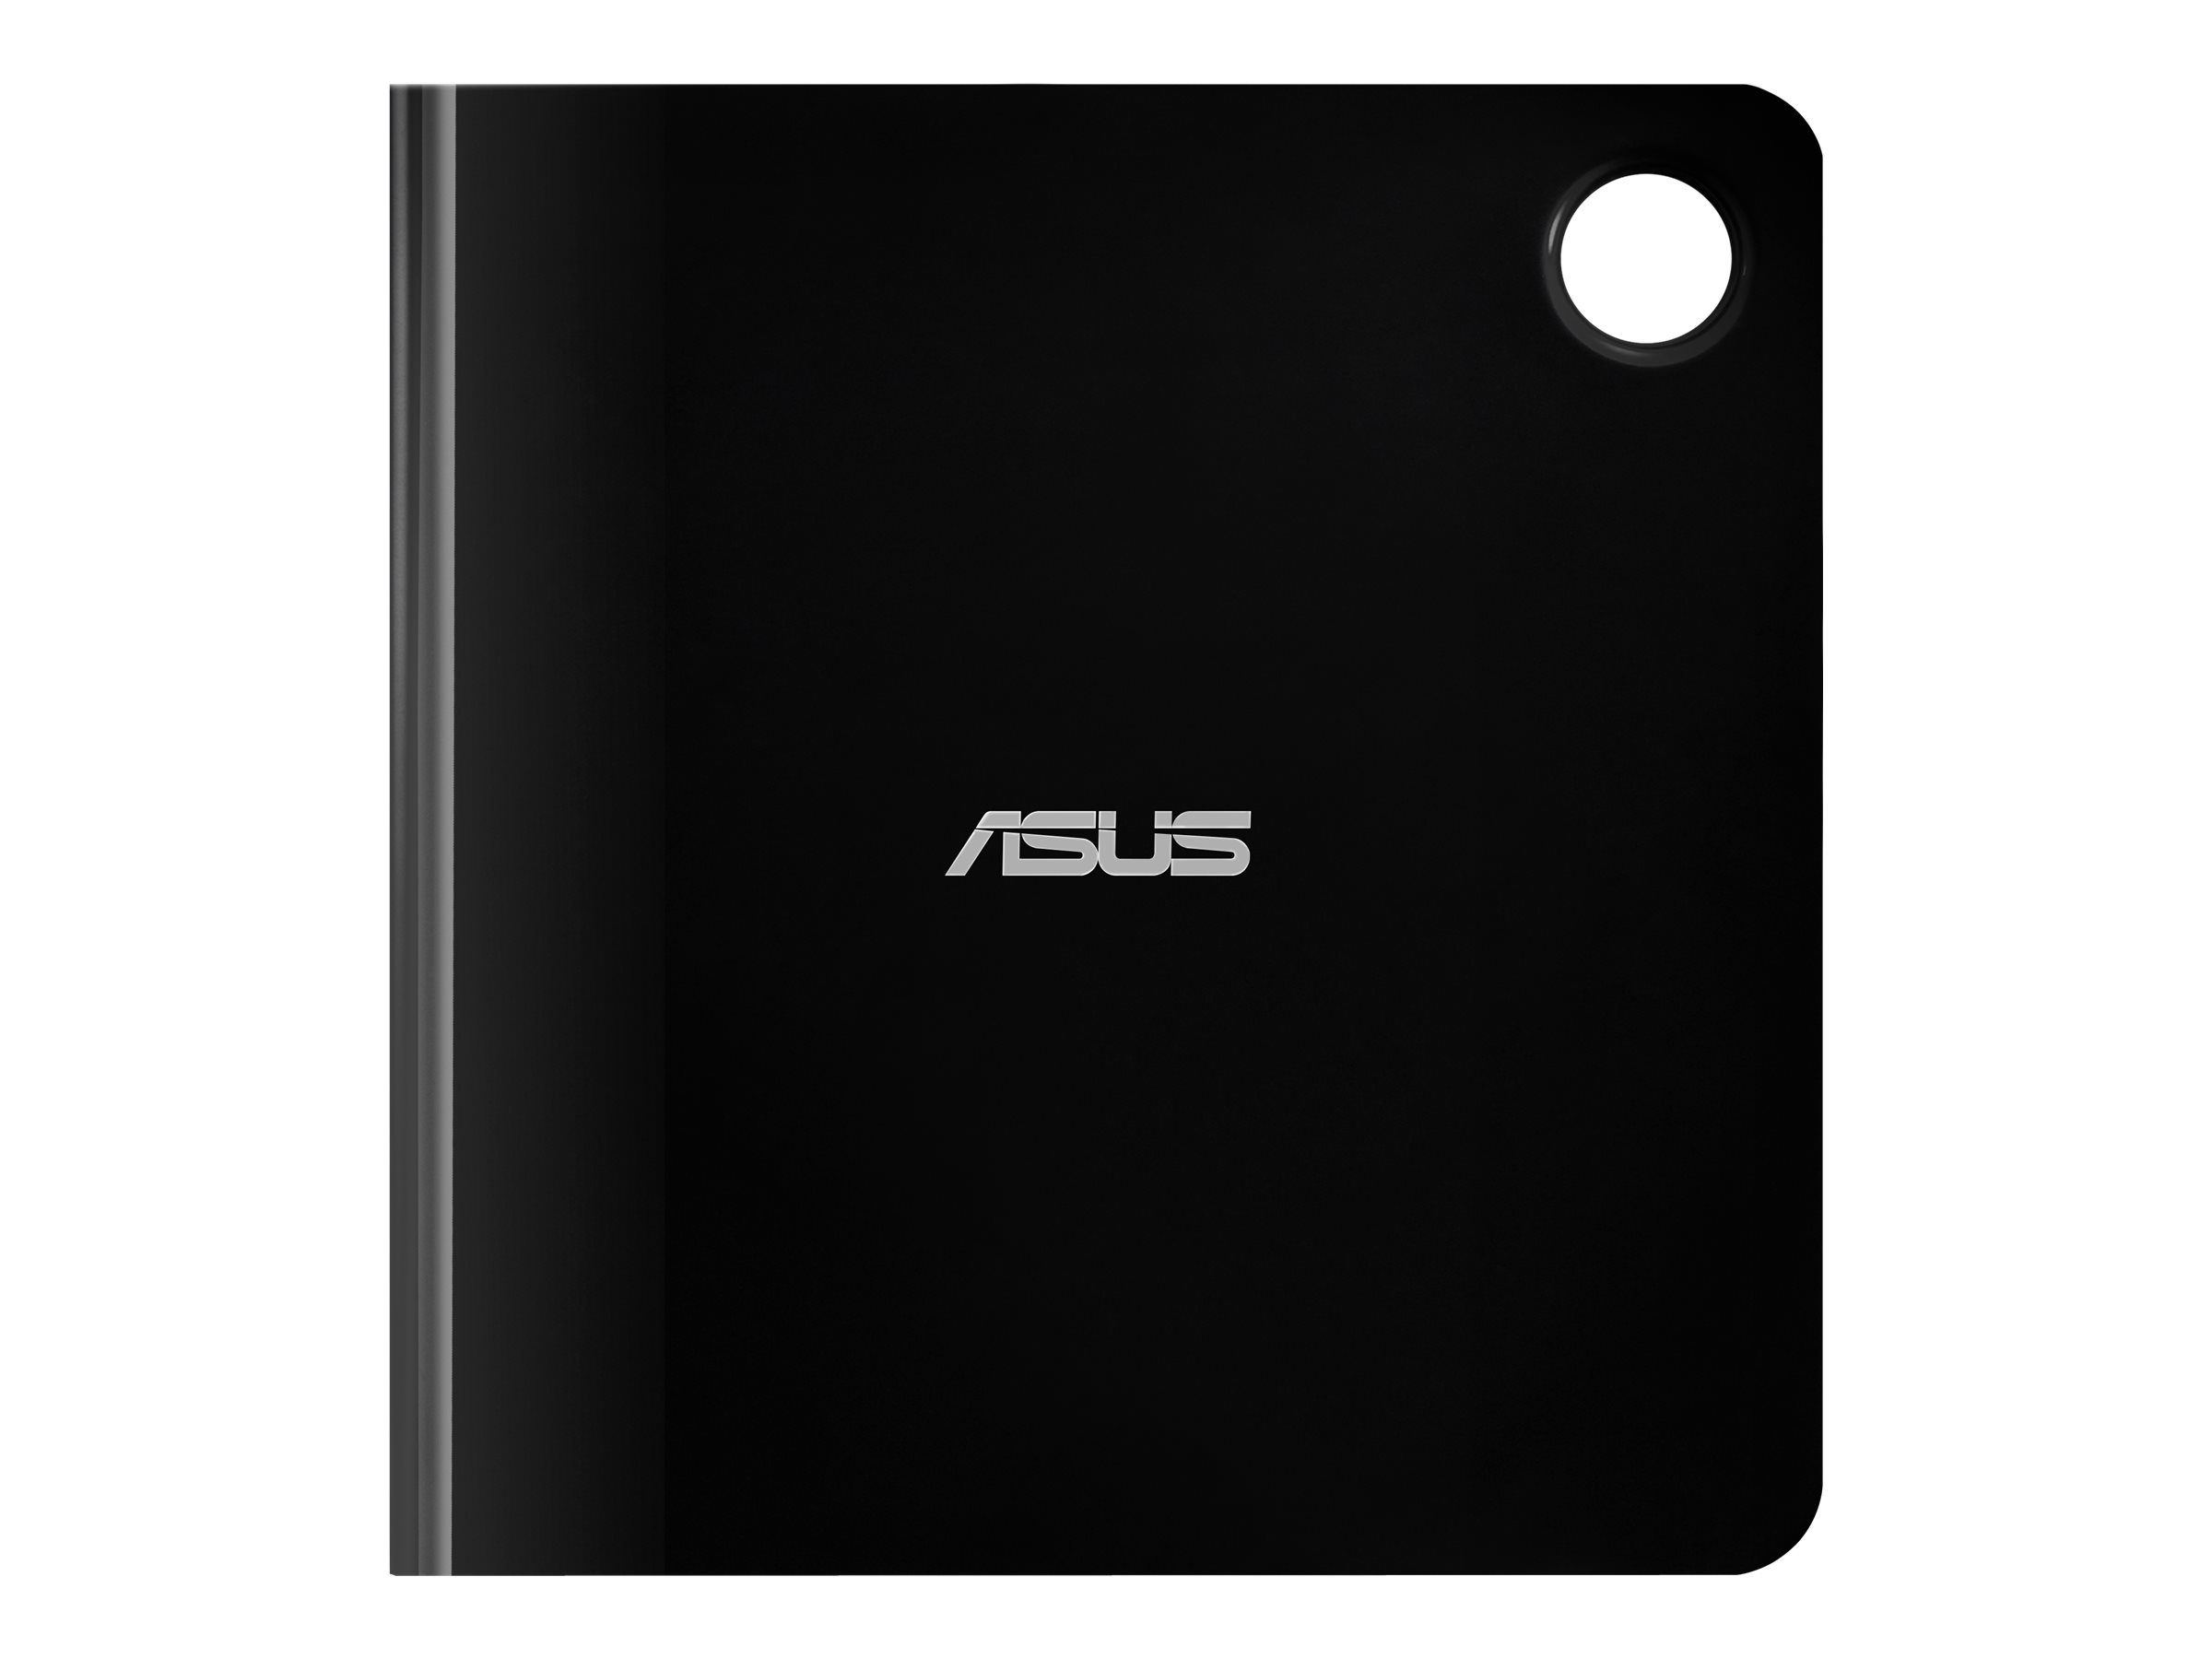 ASUS SBW-06D5H-U Blu-Ray Brenner, SlimLine extern, USB 3.0 - schwarz